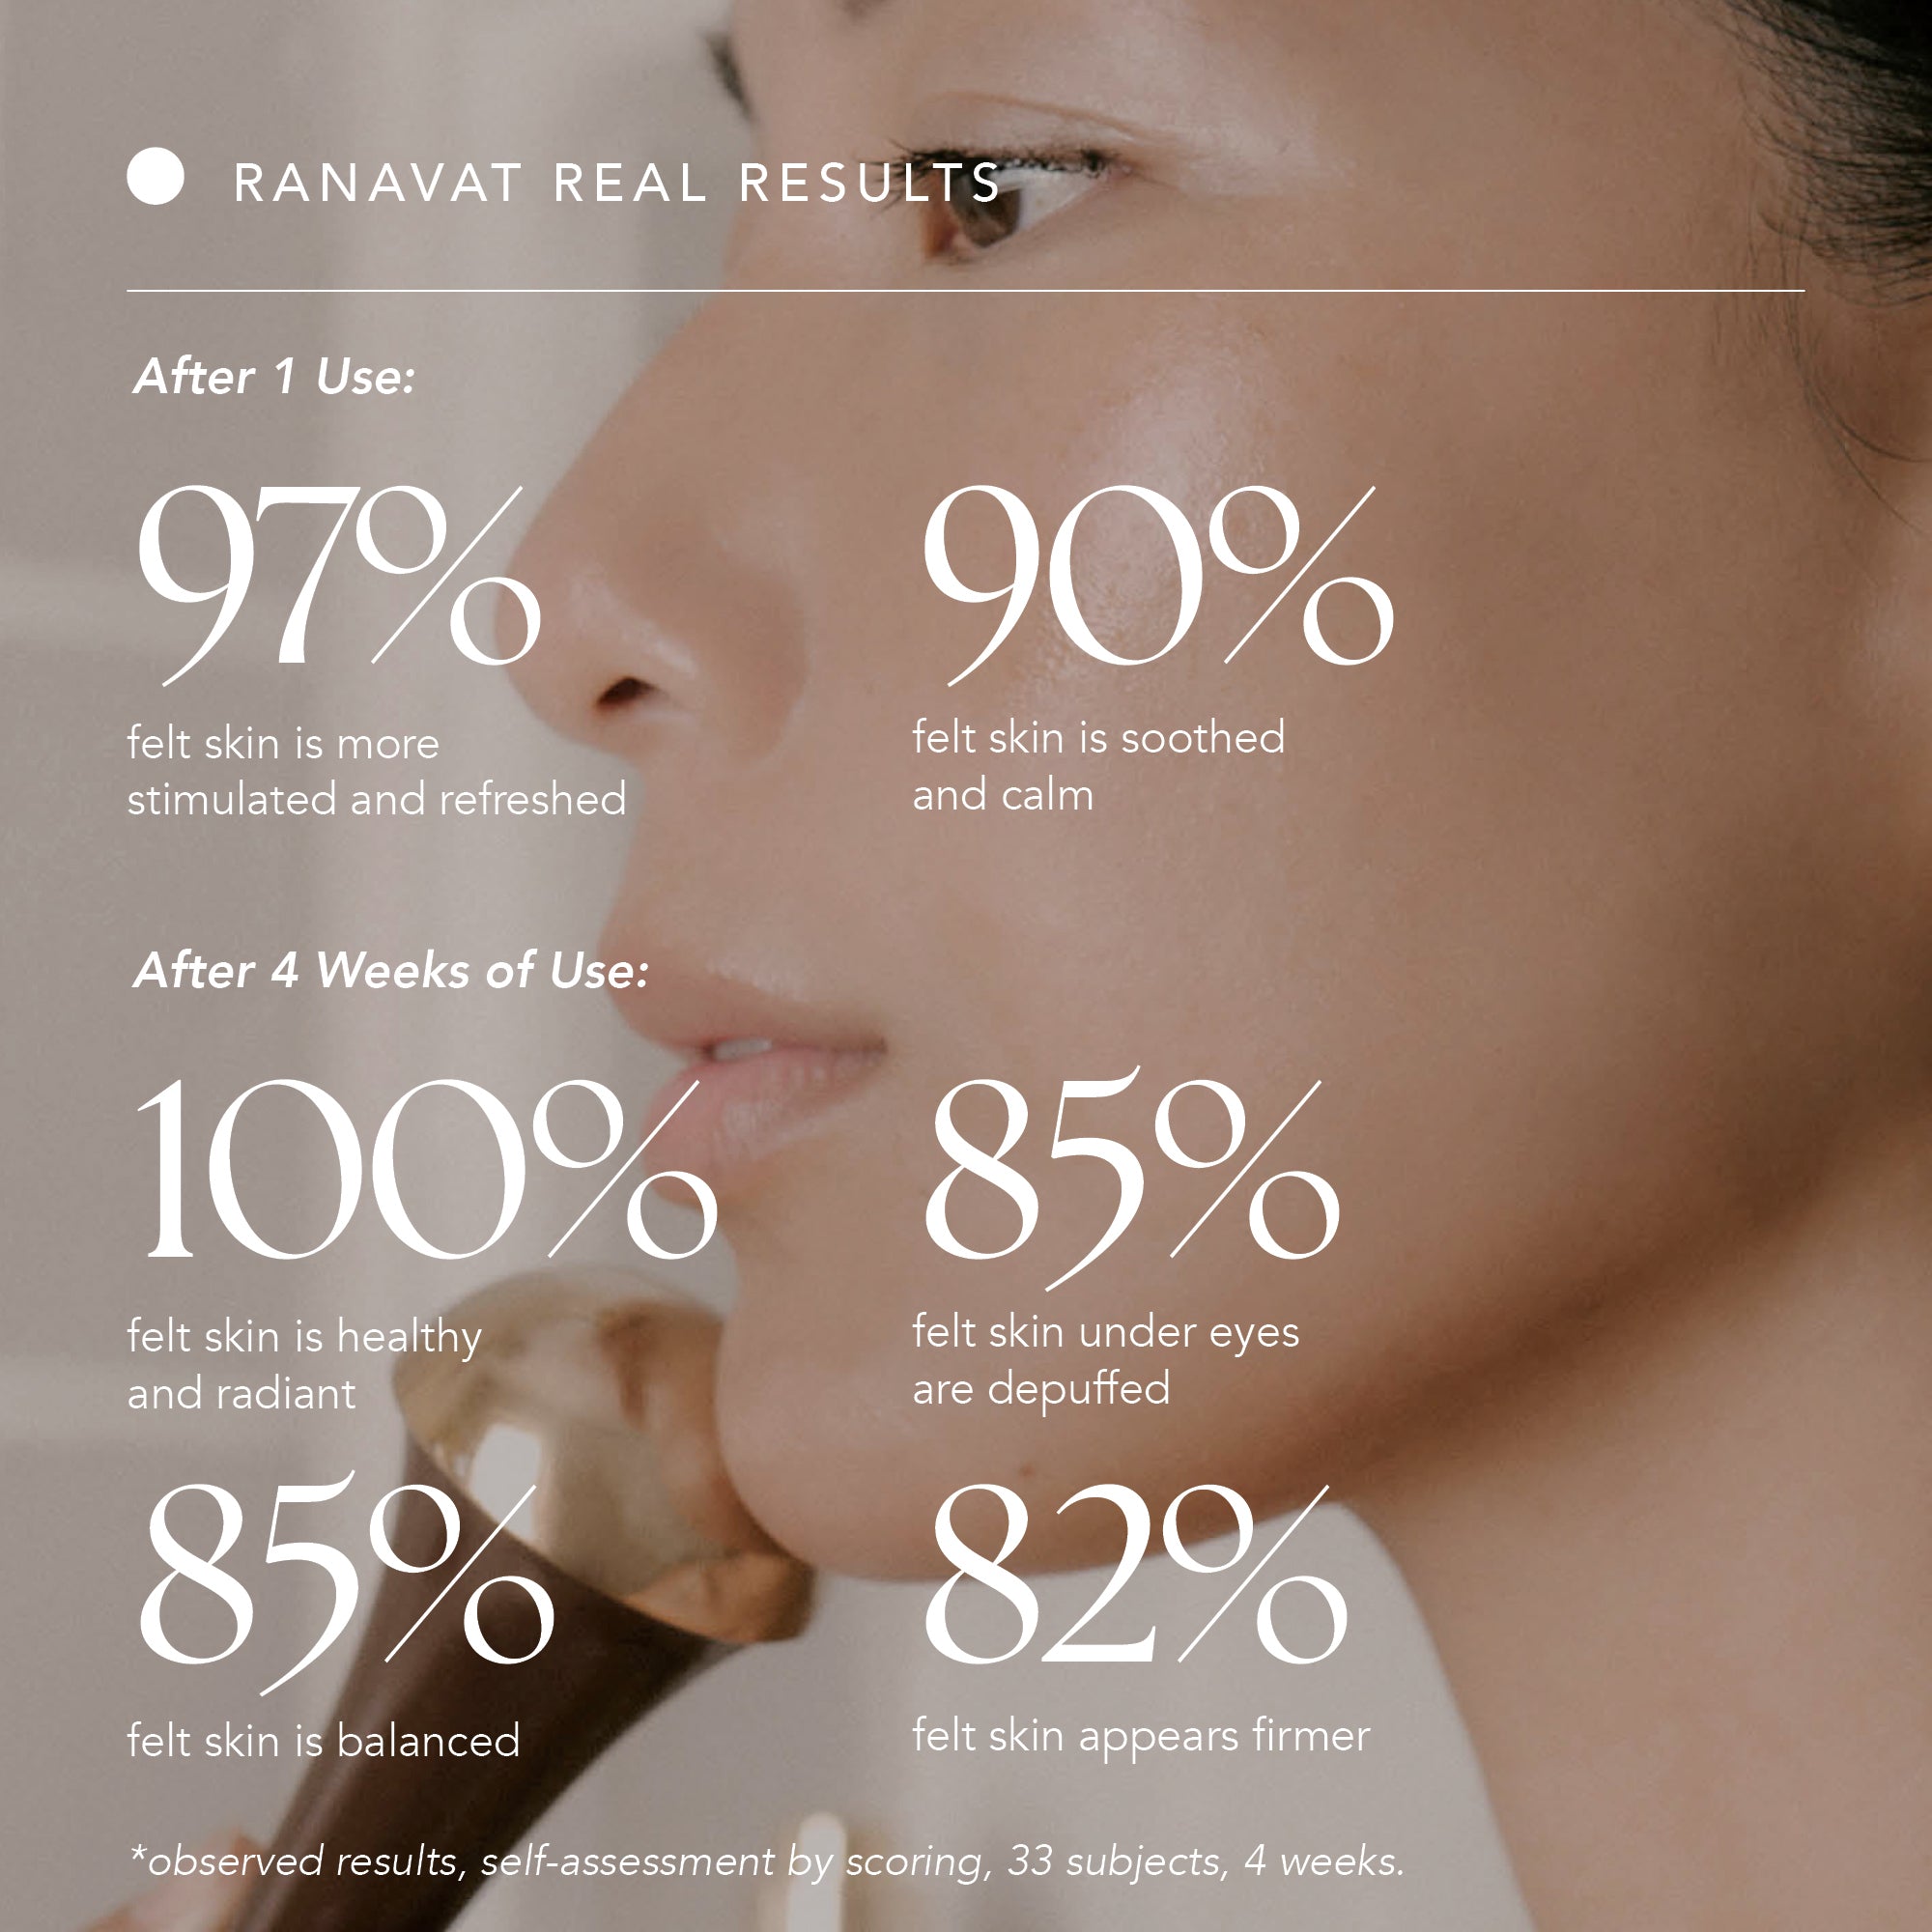 Kansa Wand: Detoxifying Facial Massage Tool